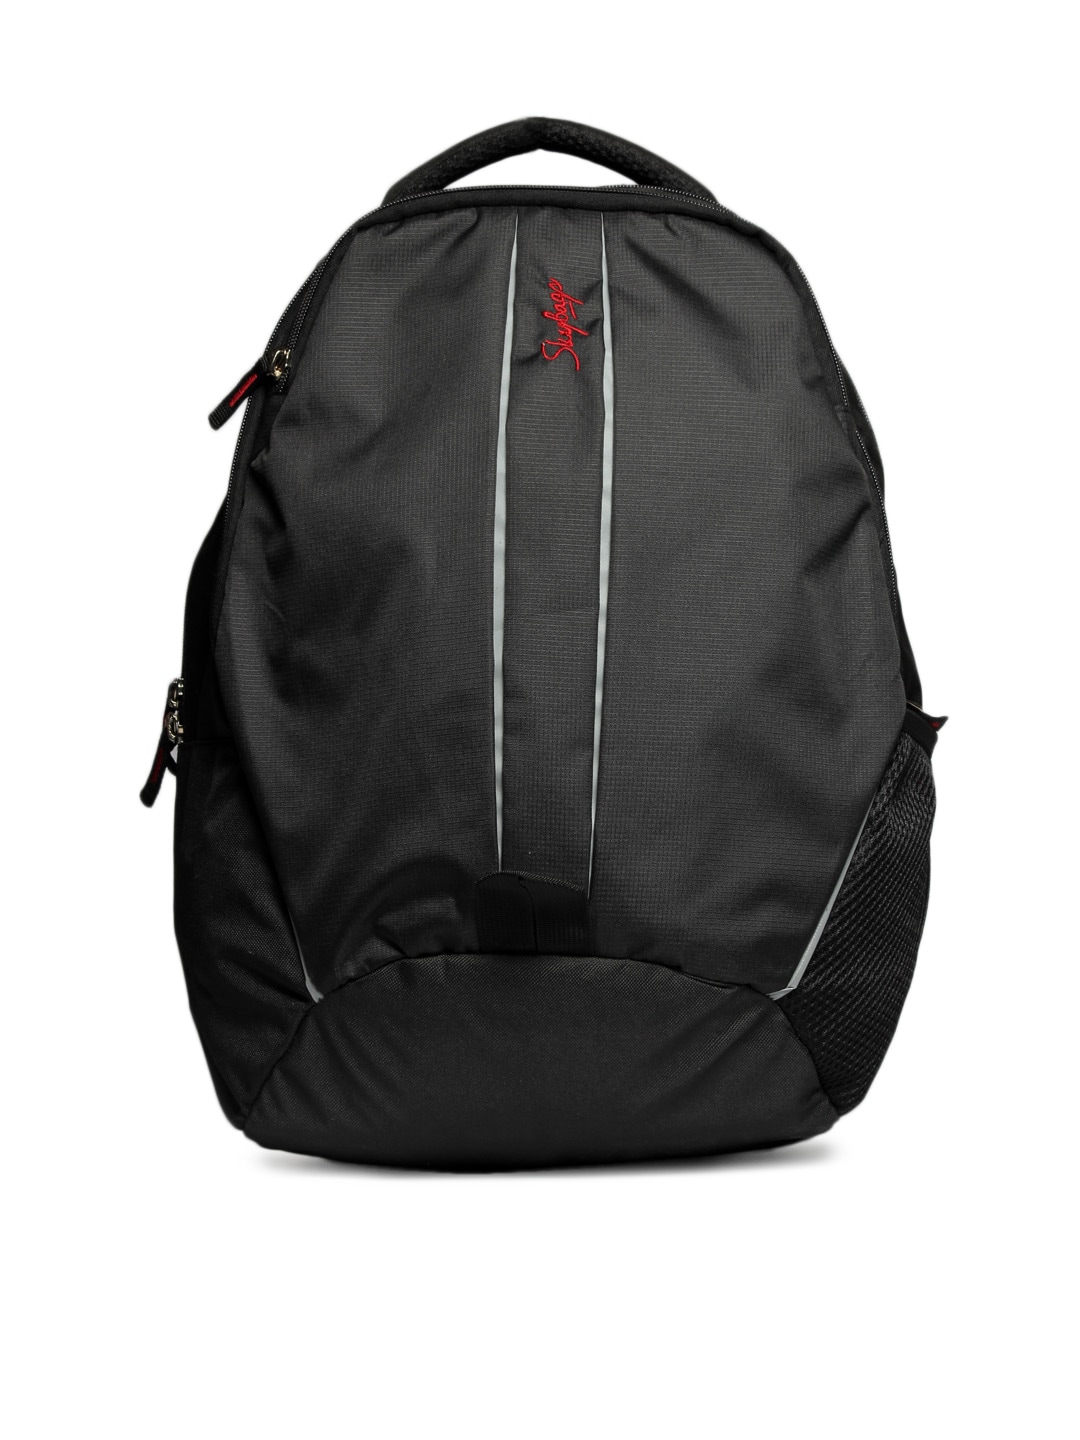 Skybags Unisex Black Backpack